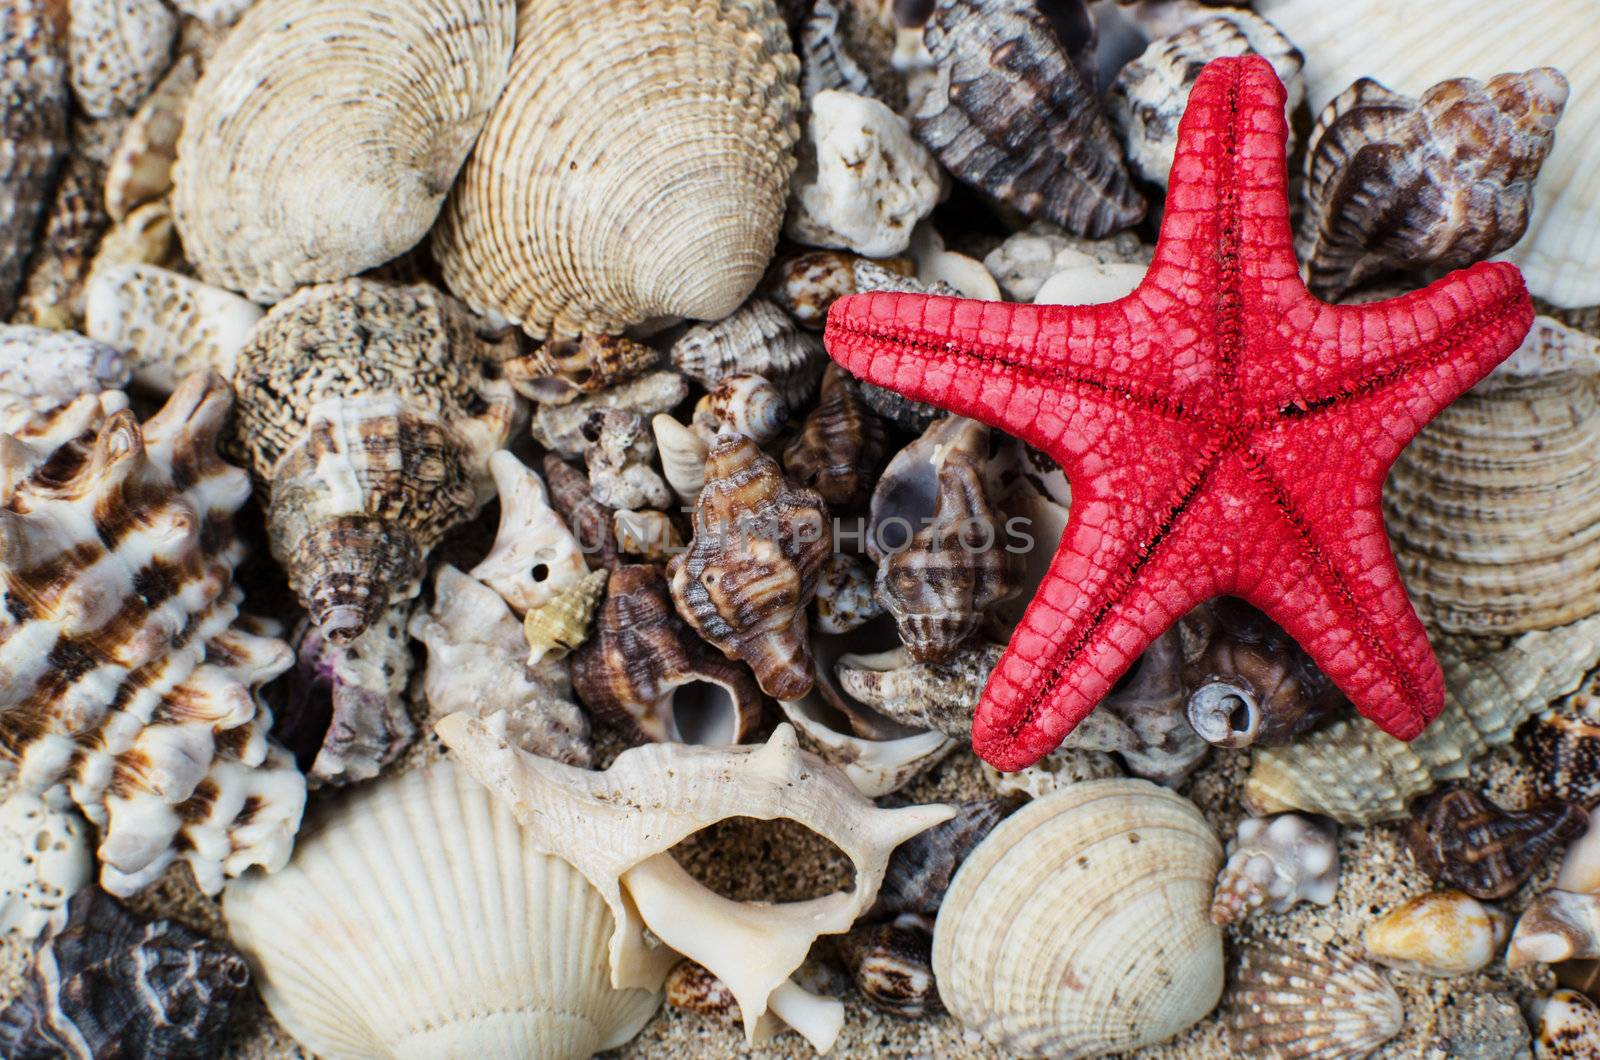 Starfish and shells on a sandy beach